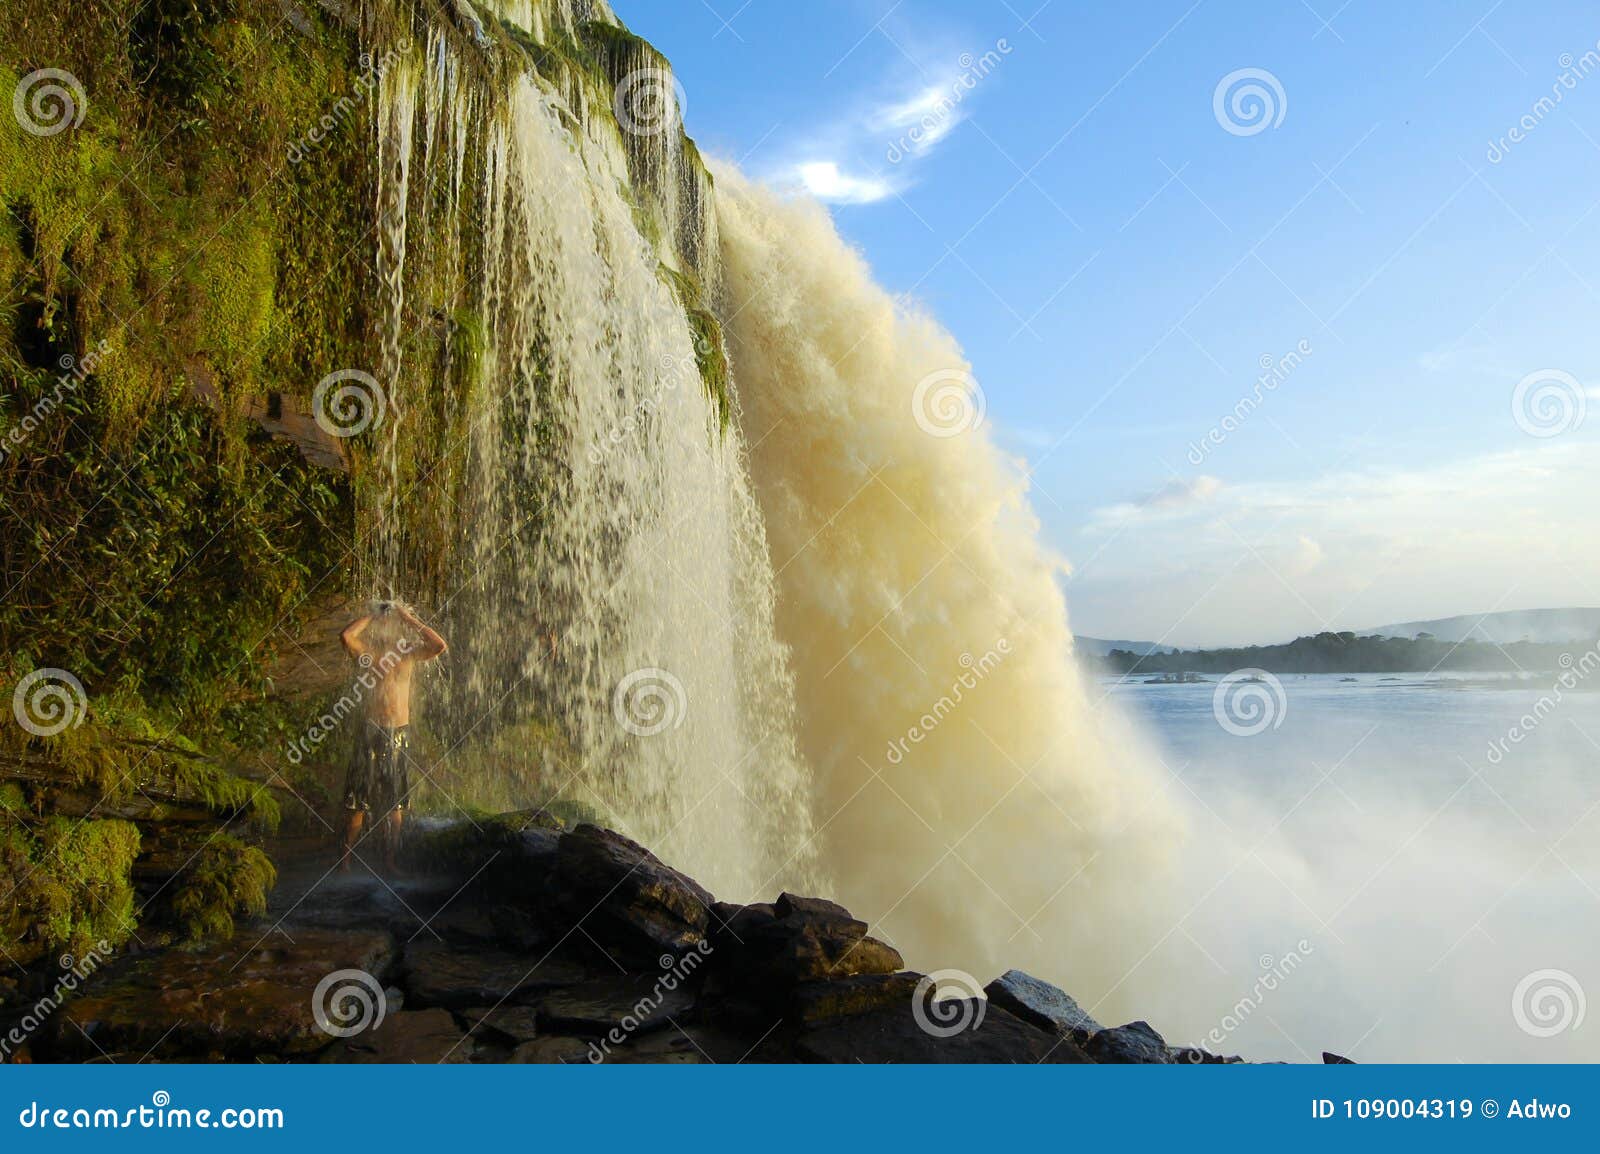 sapo waterfall